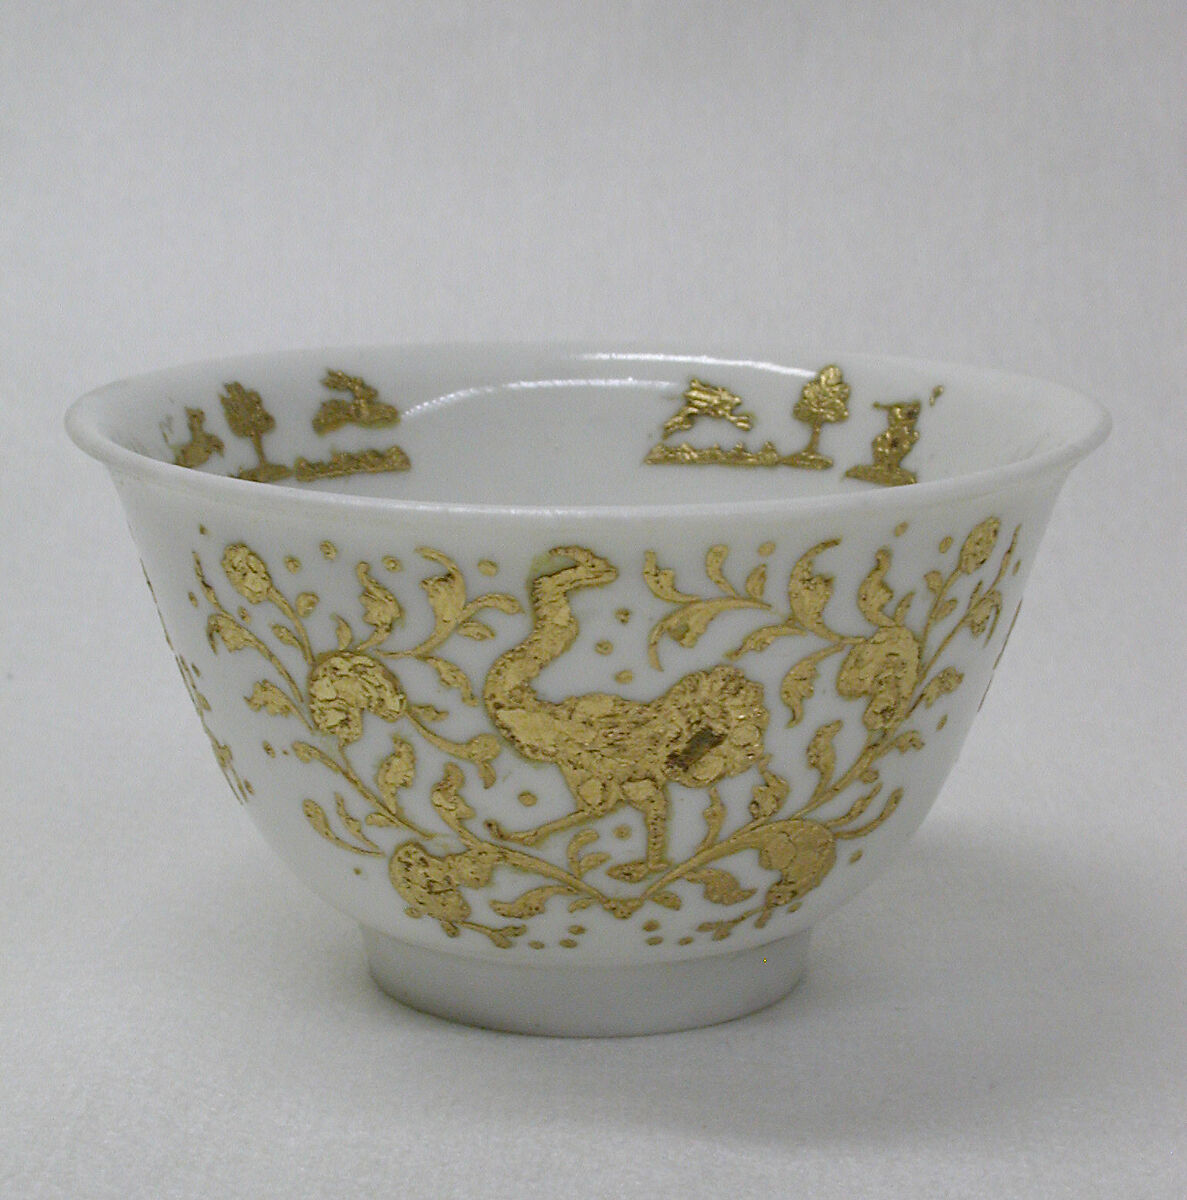 Teacup (1 of 6) (part of a service), Meissen Manufactory (German, 1710–present), Hard-paste porcelain, German, Meissen 